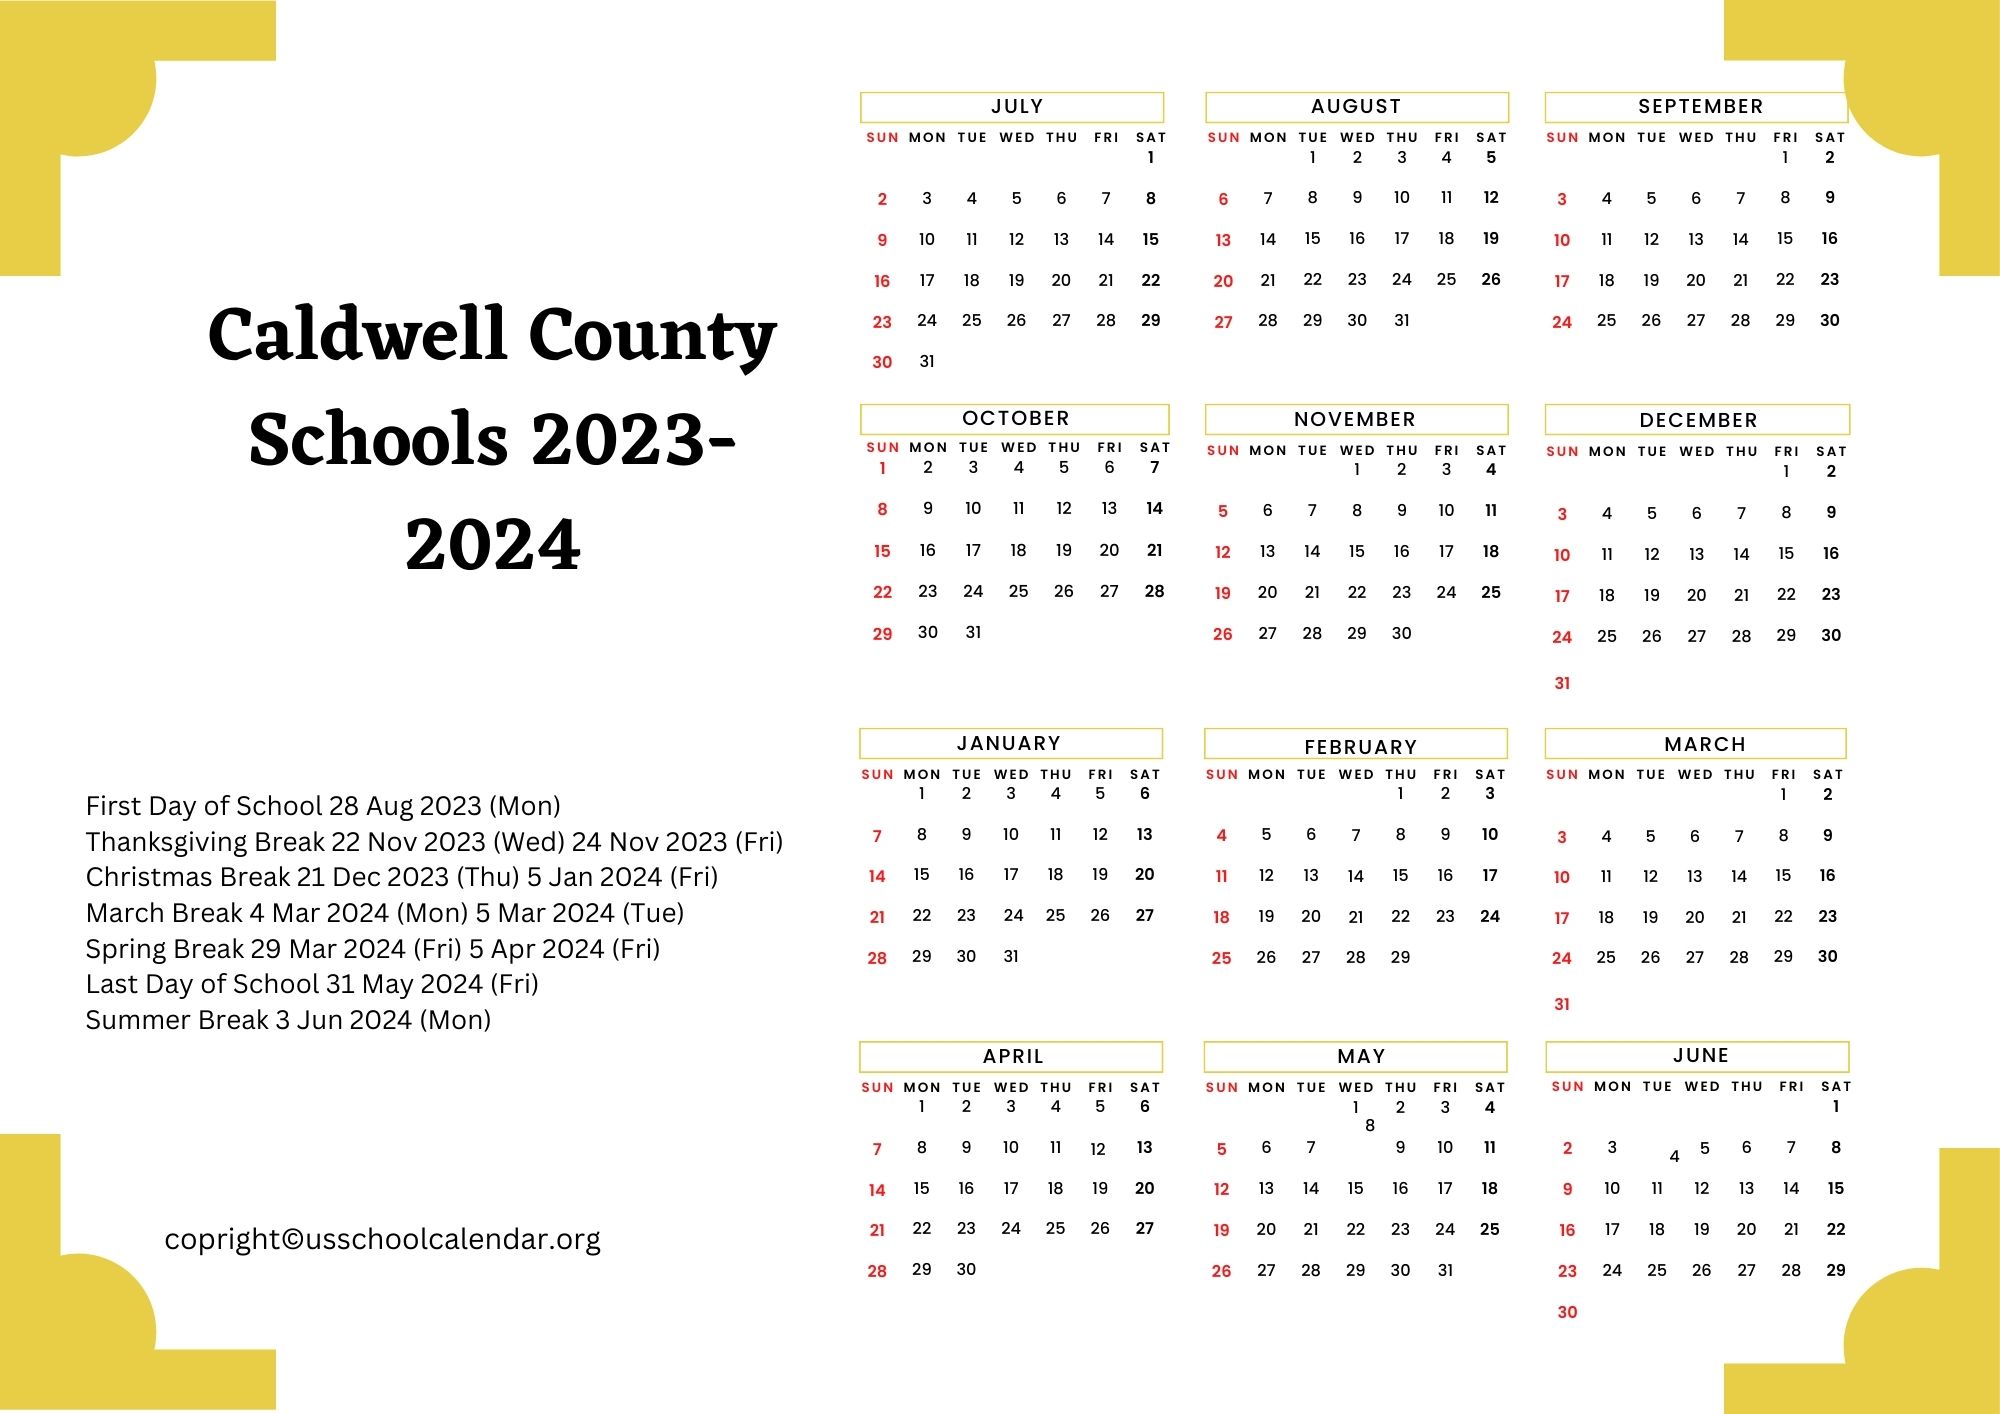 caldwell-county-schools-calendar-with-holidays-2023-2024